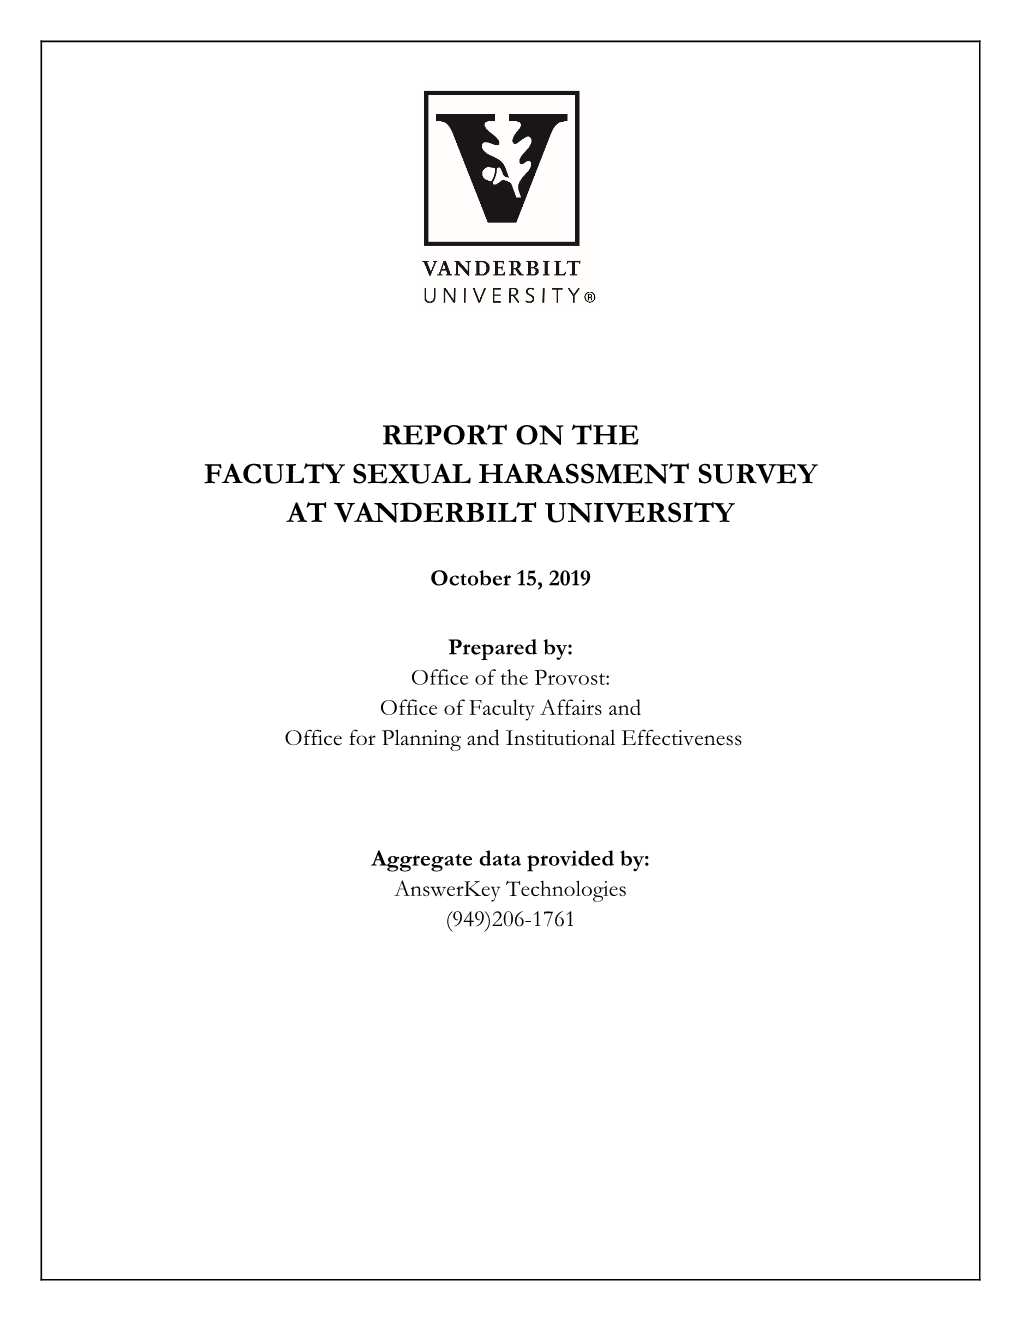 Report on the Faculty Sexual Harassment Survey at Vanderbilt University